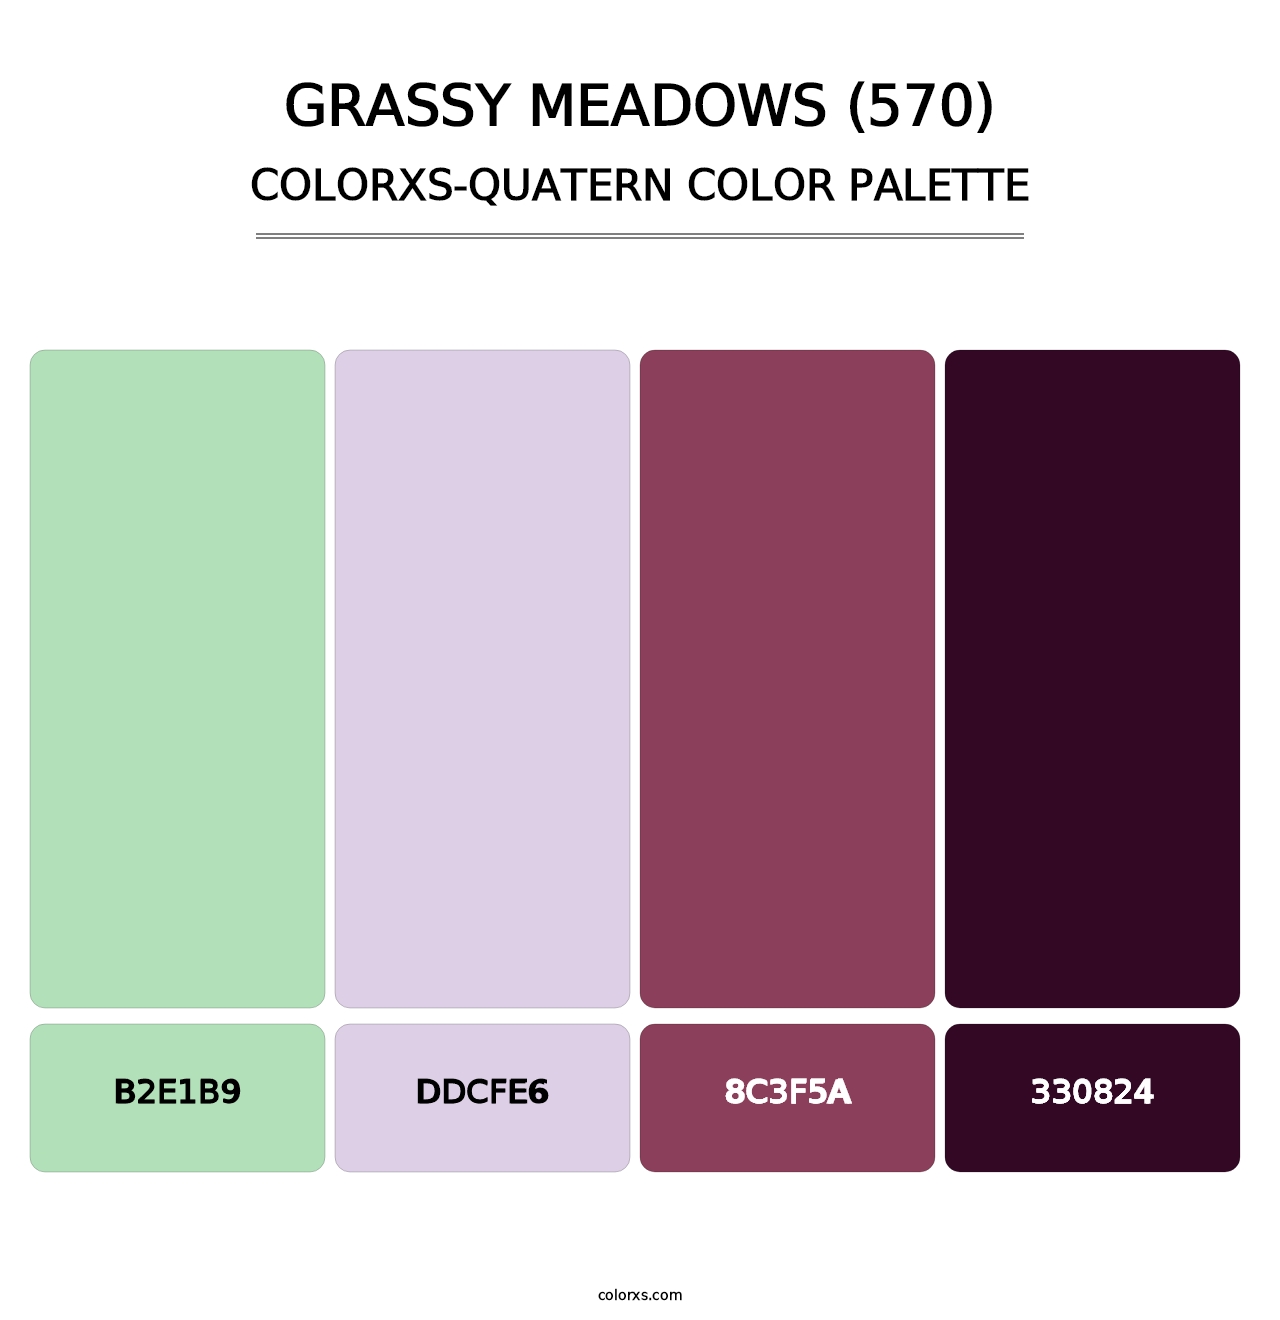 Grassy Meadows (570) - Colorxs Quatern Palette